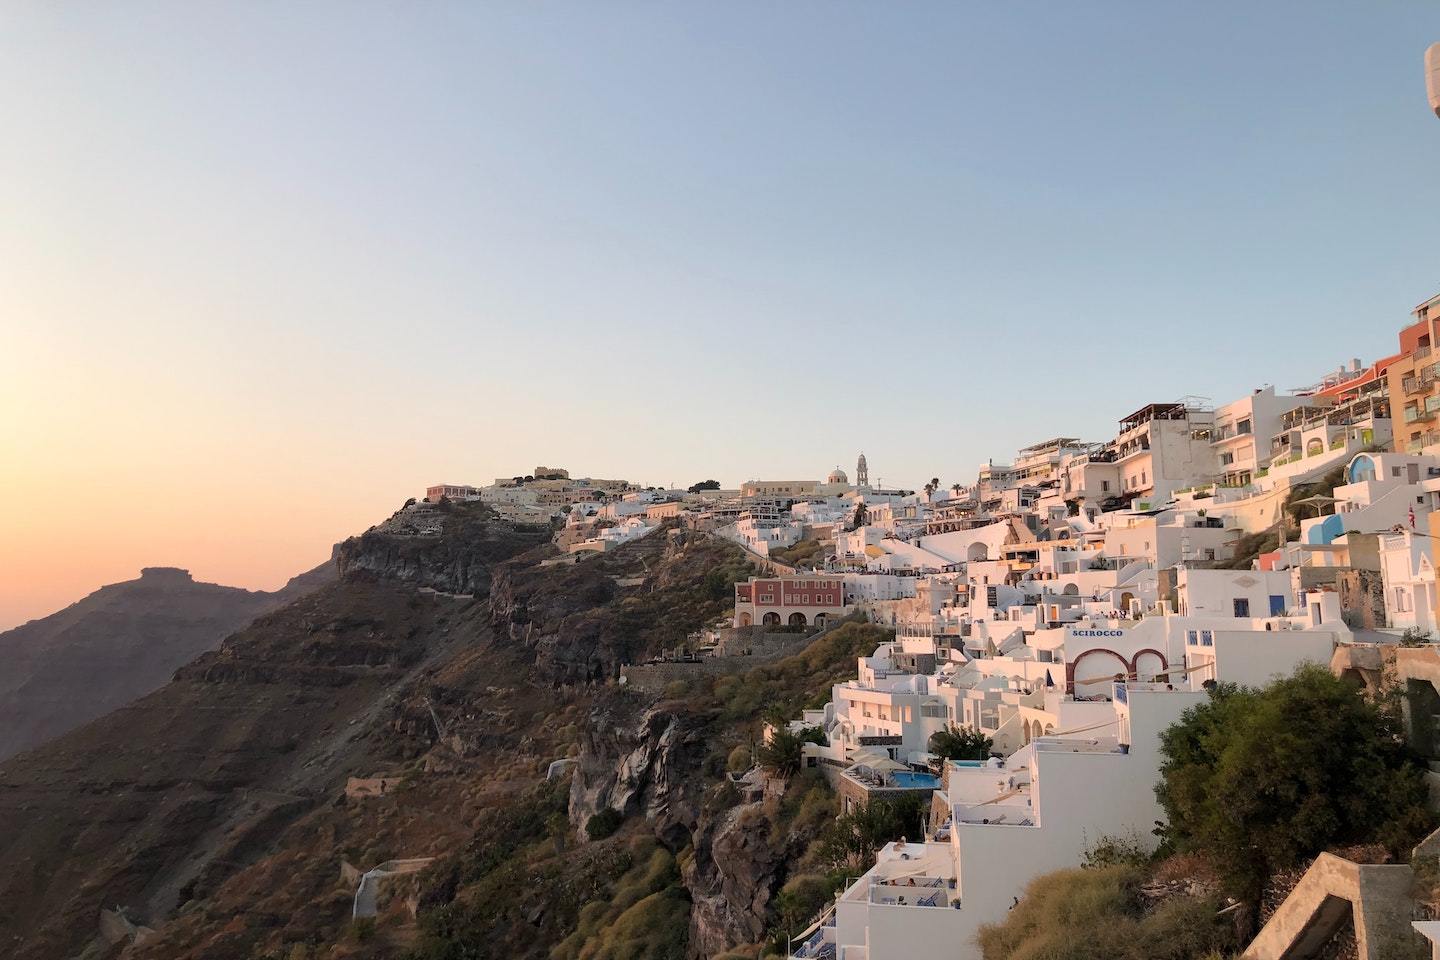 Santorini Attraction: View of white houses on hillside in Fira